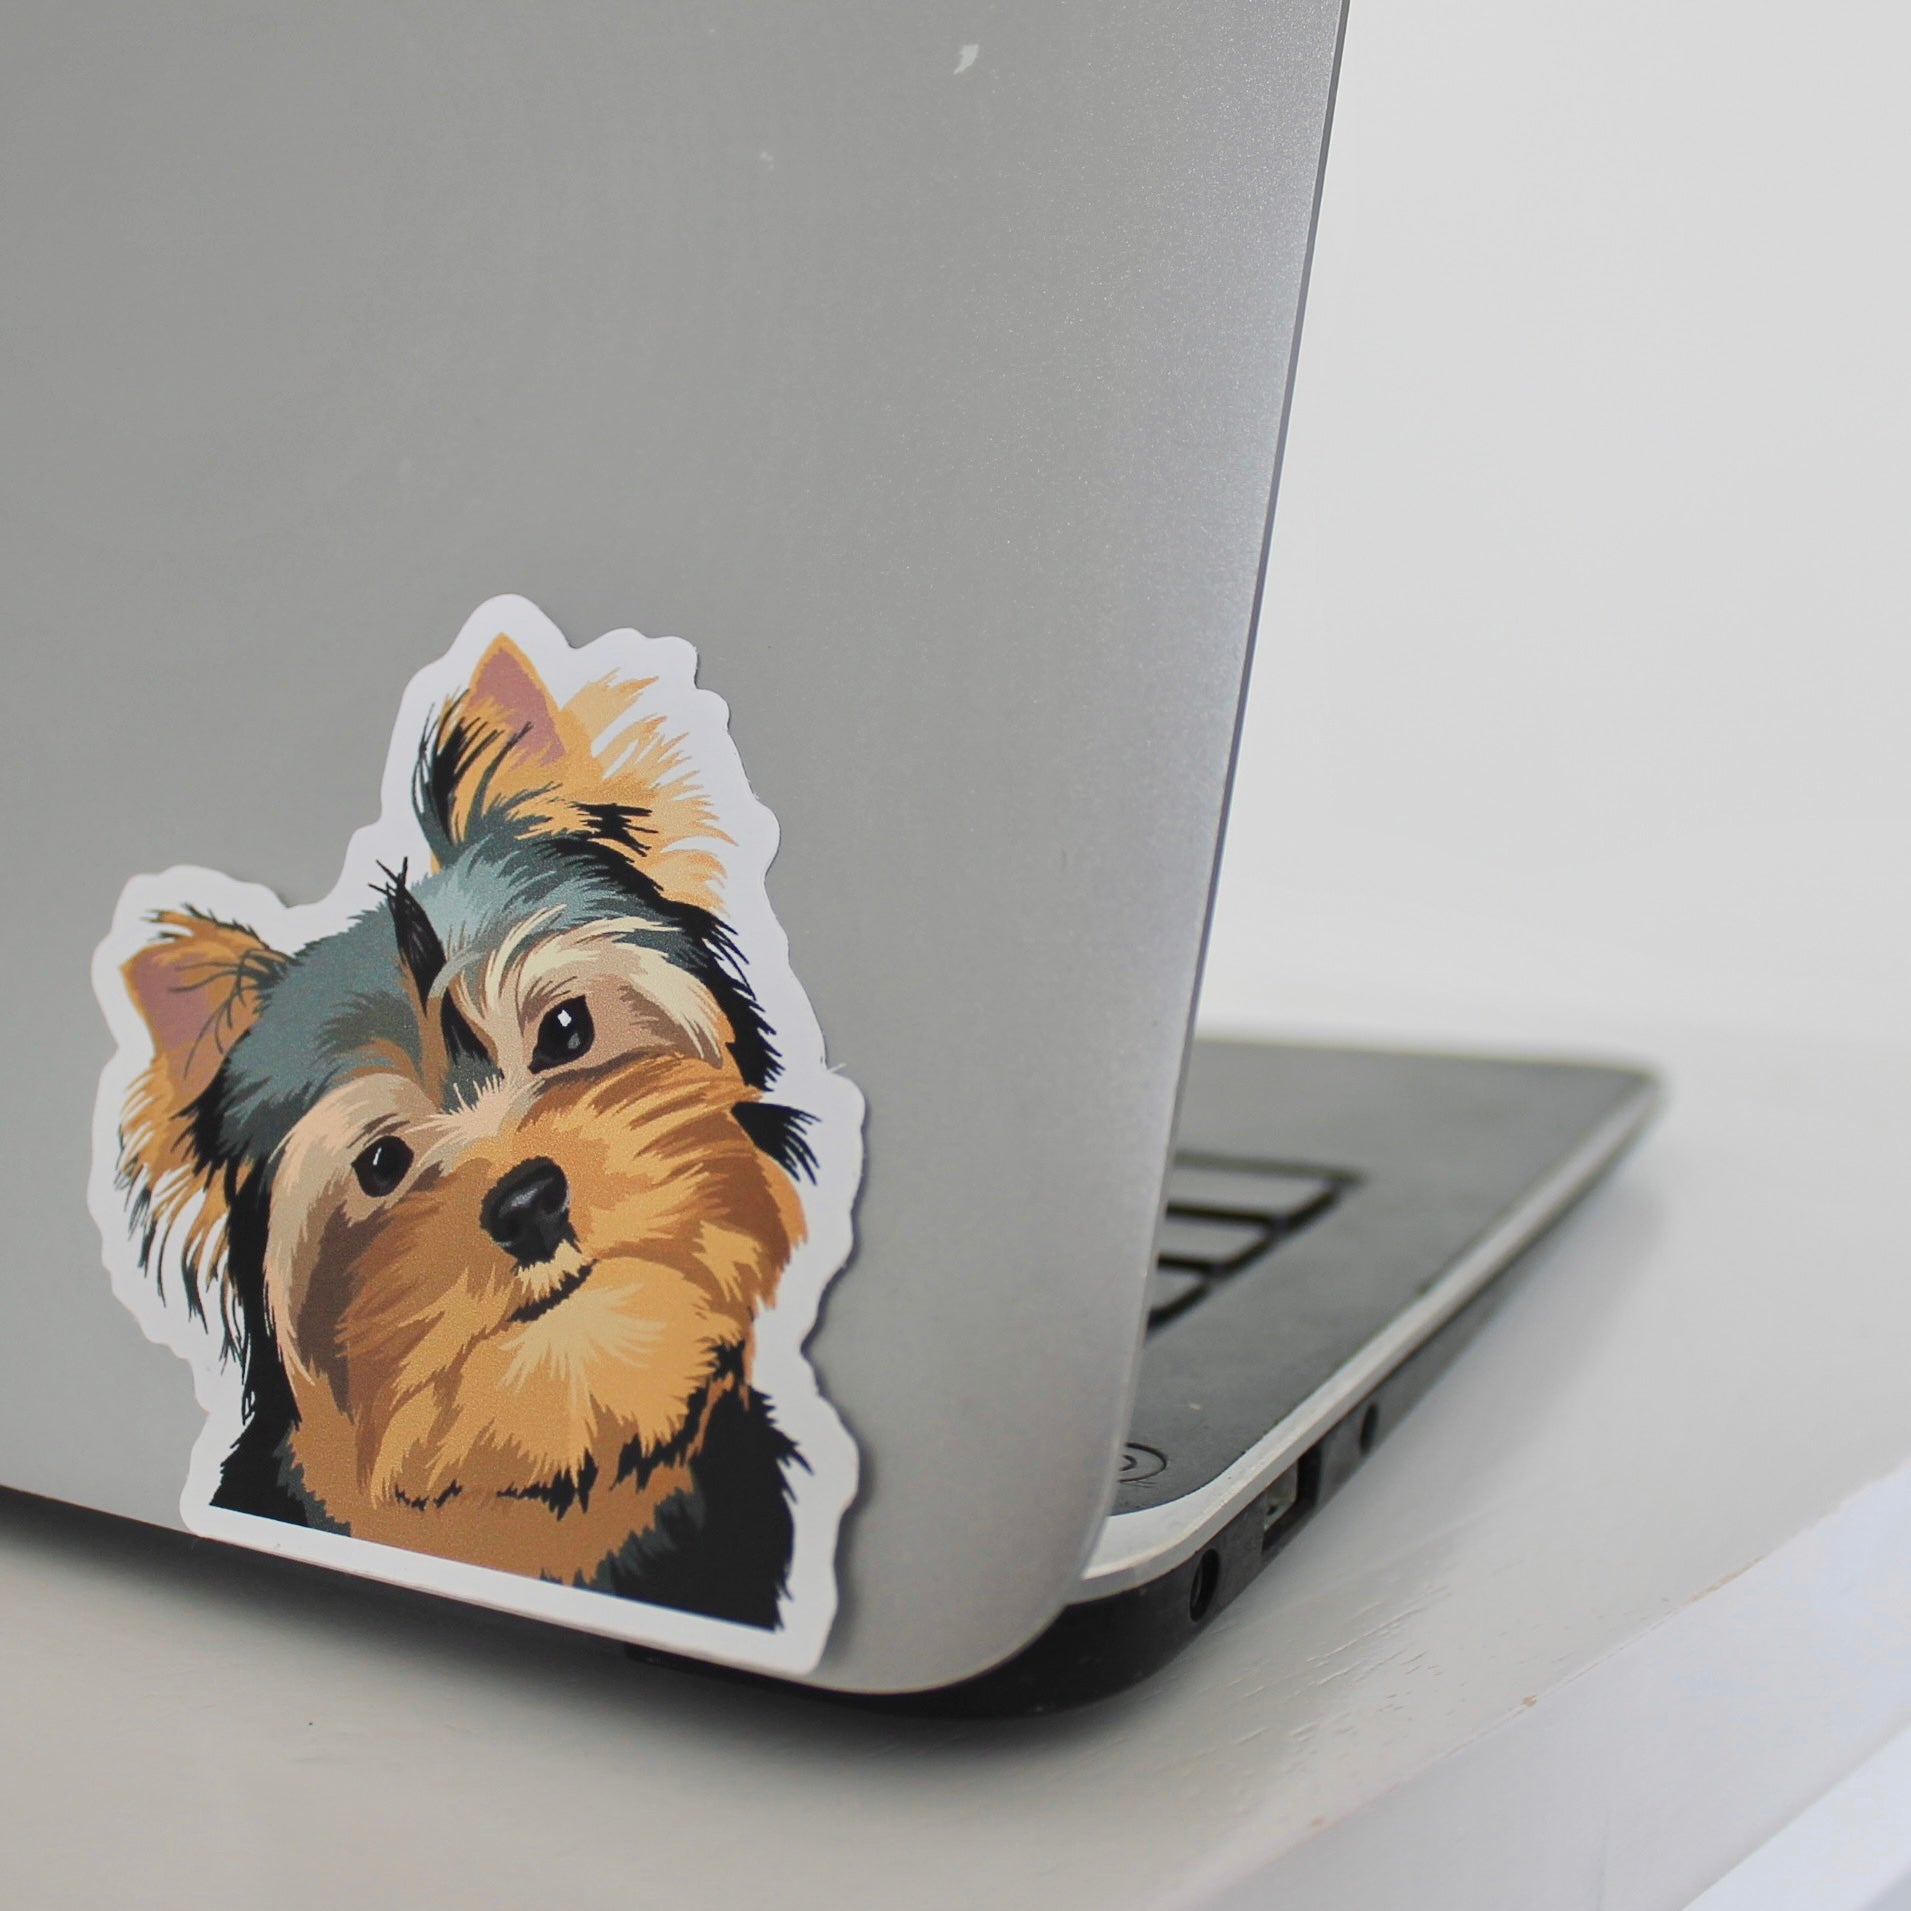 Yorkshire terrier on laptop